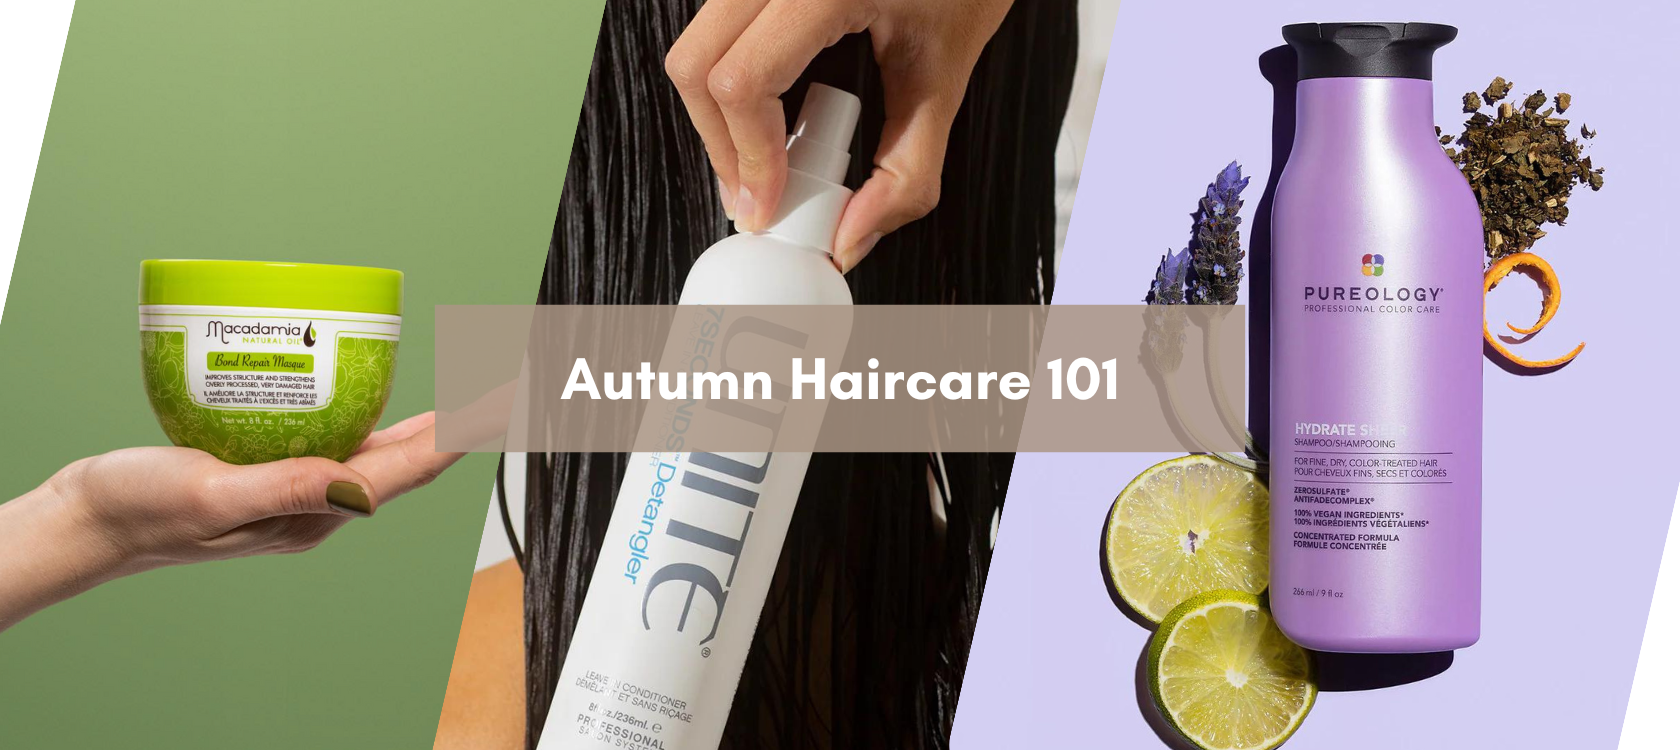 Autumn Haircare 101